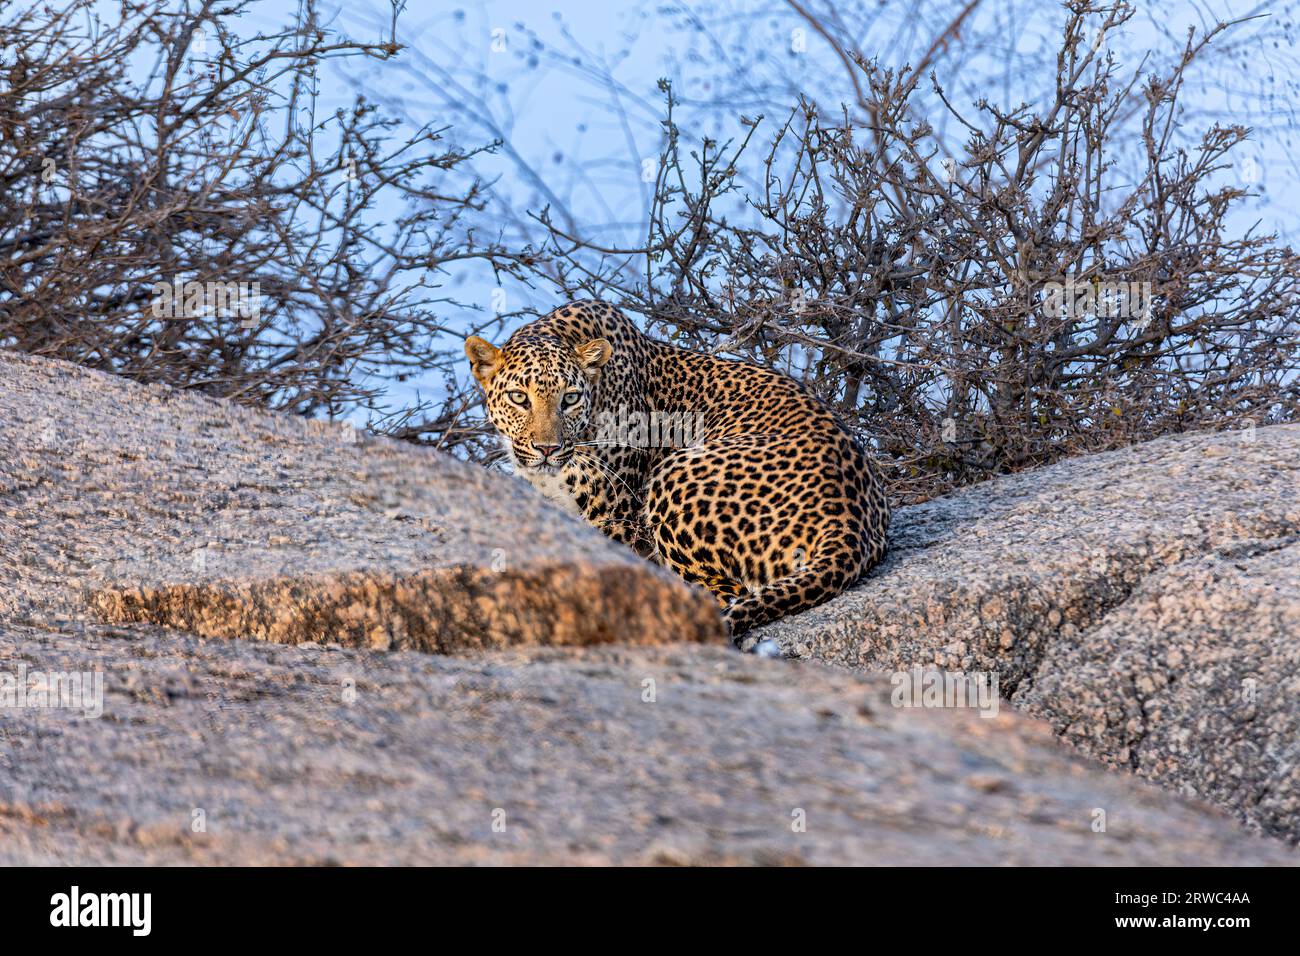 Crouching Leopard at Bera, Jawai Bandh, Rajasthan, India Stock Photo